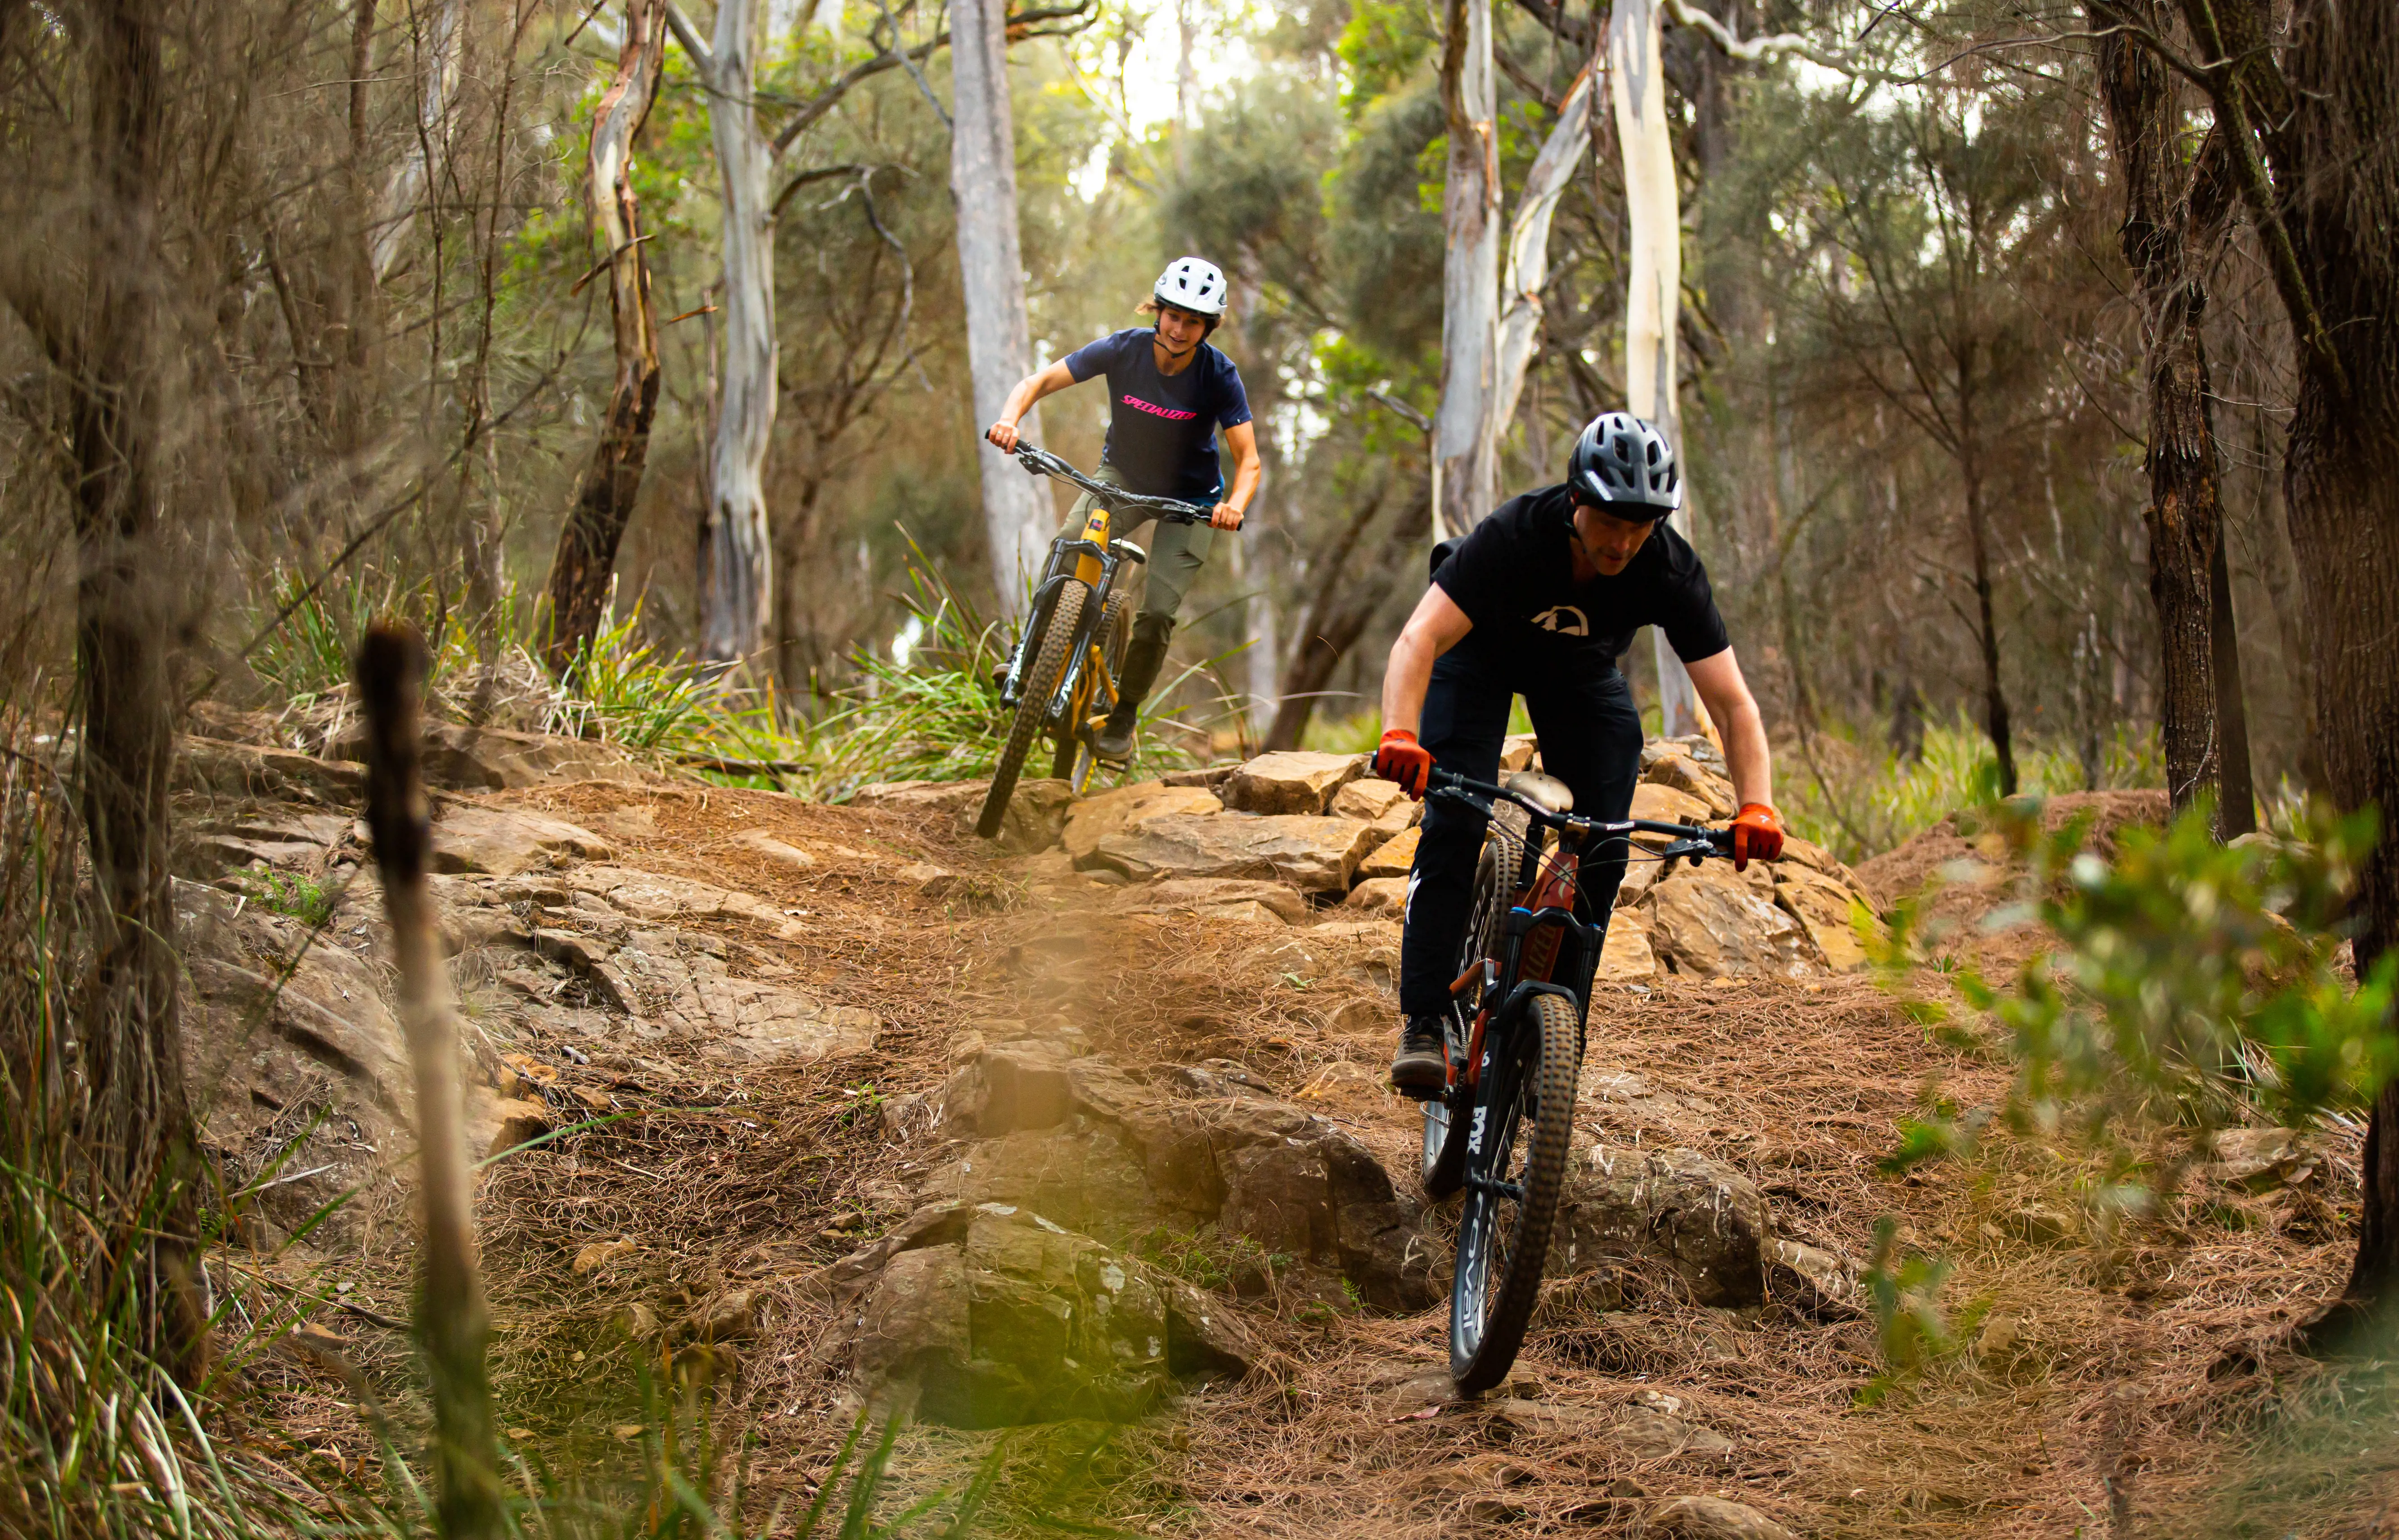 A pair of mountain bike riders negotiate rocks on a dusty trail through dense scrub.